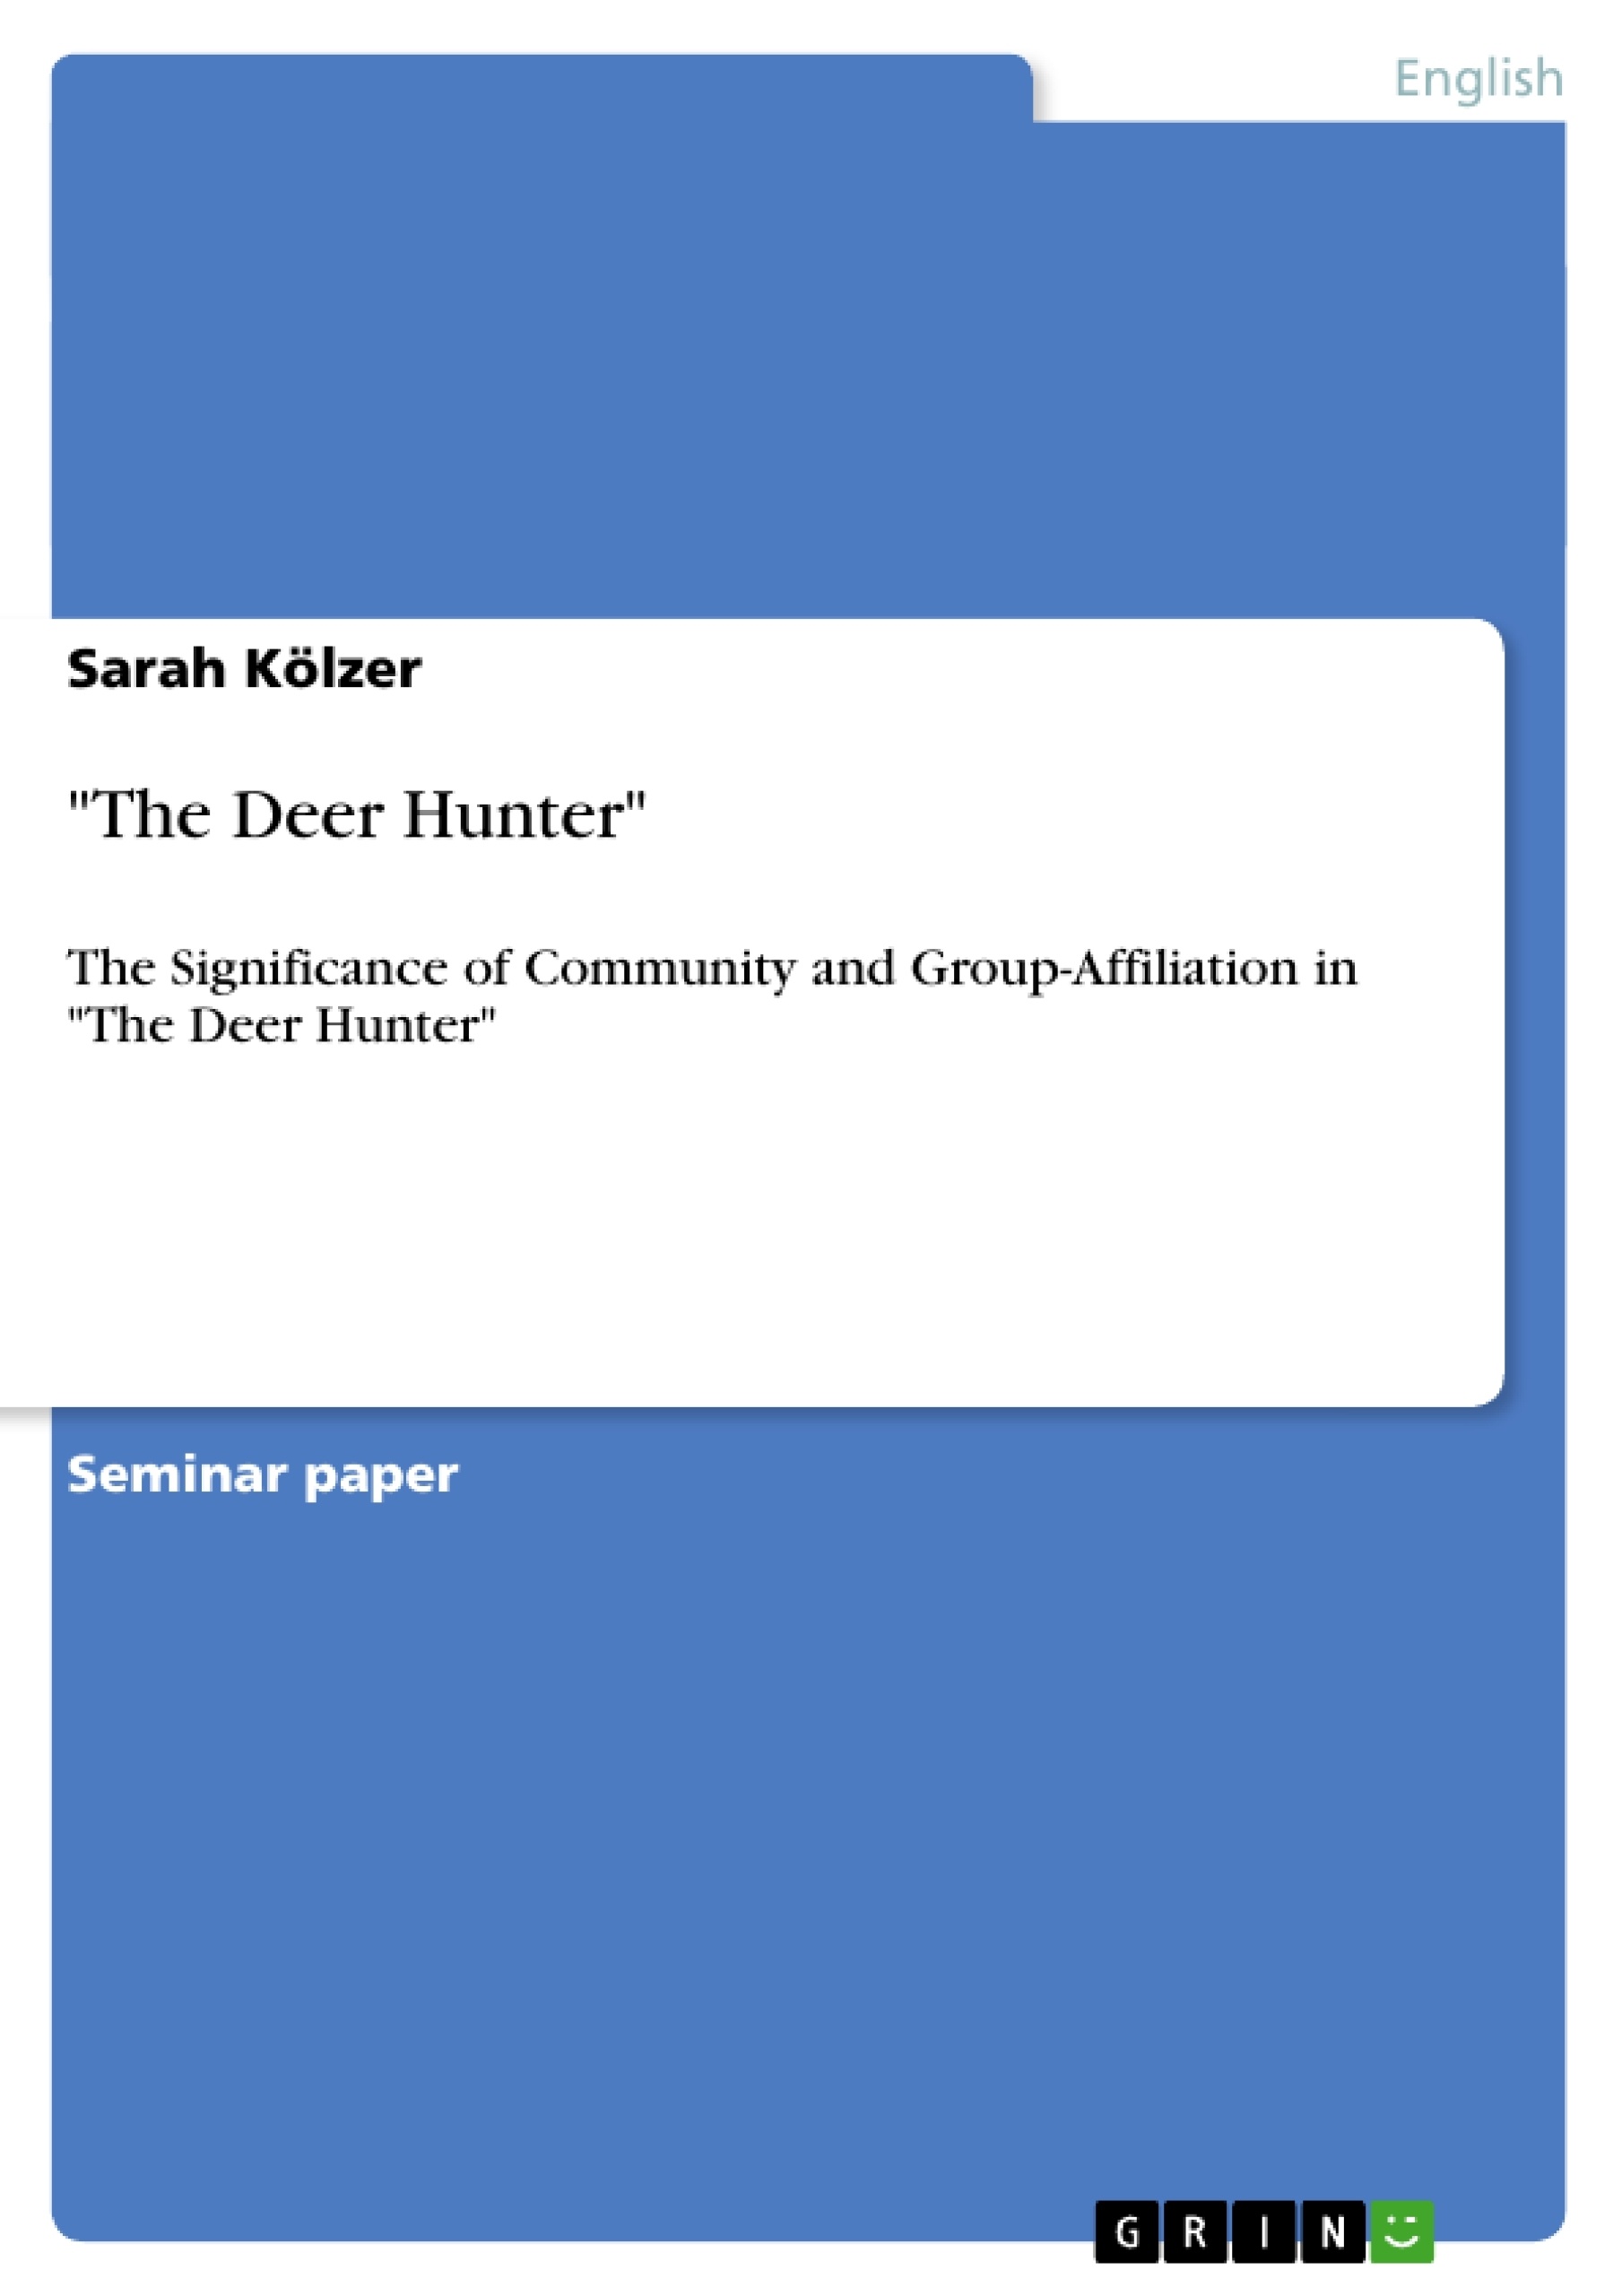 Titel: "The Deer Hunter"